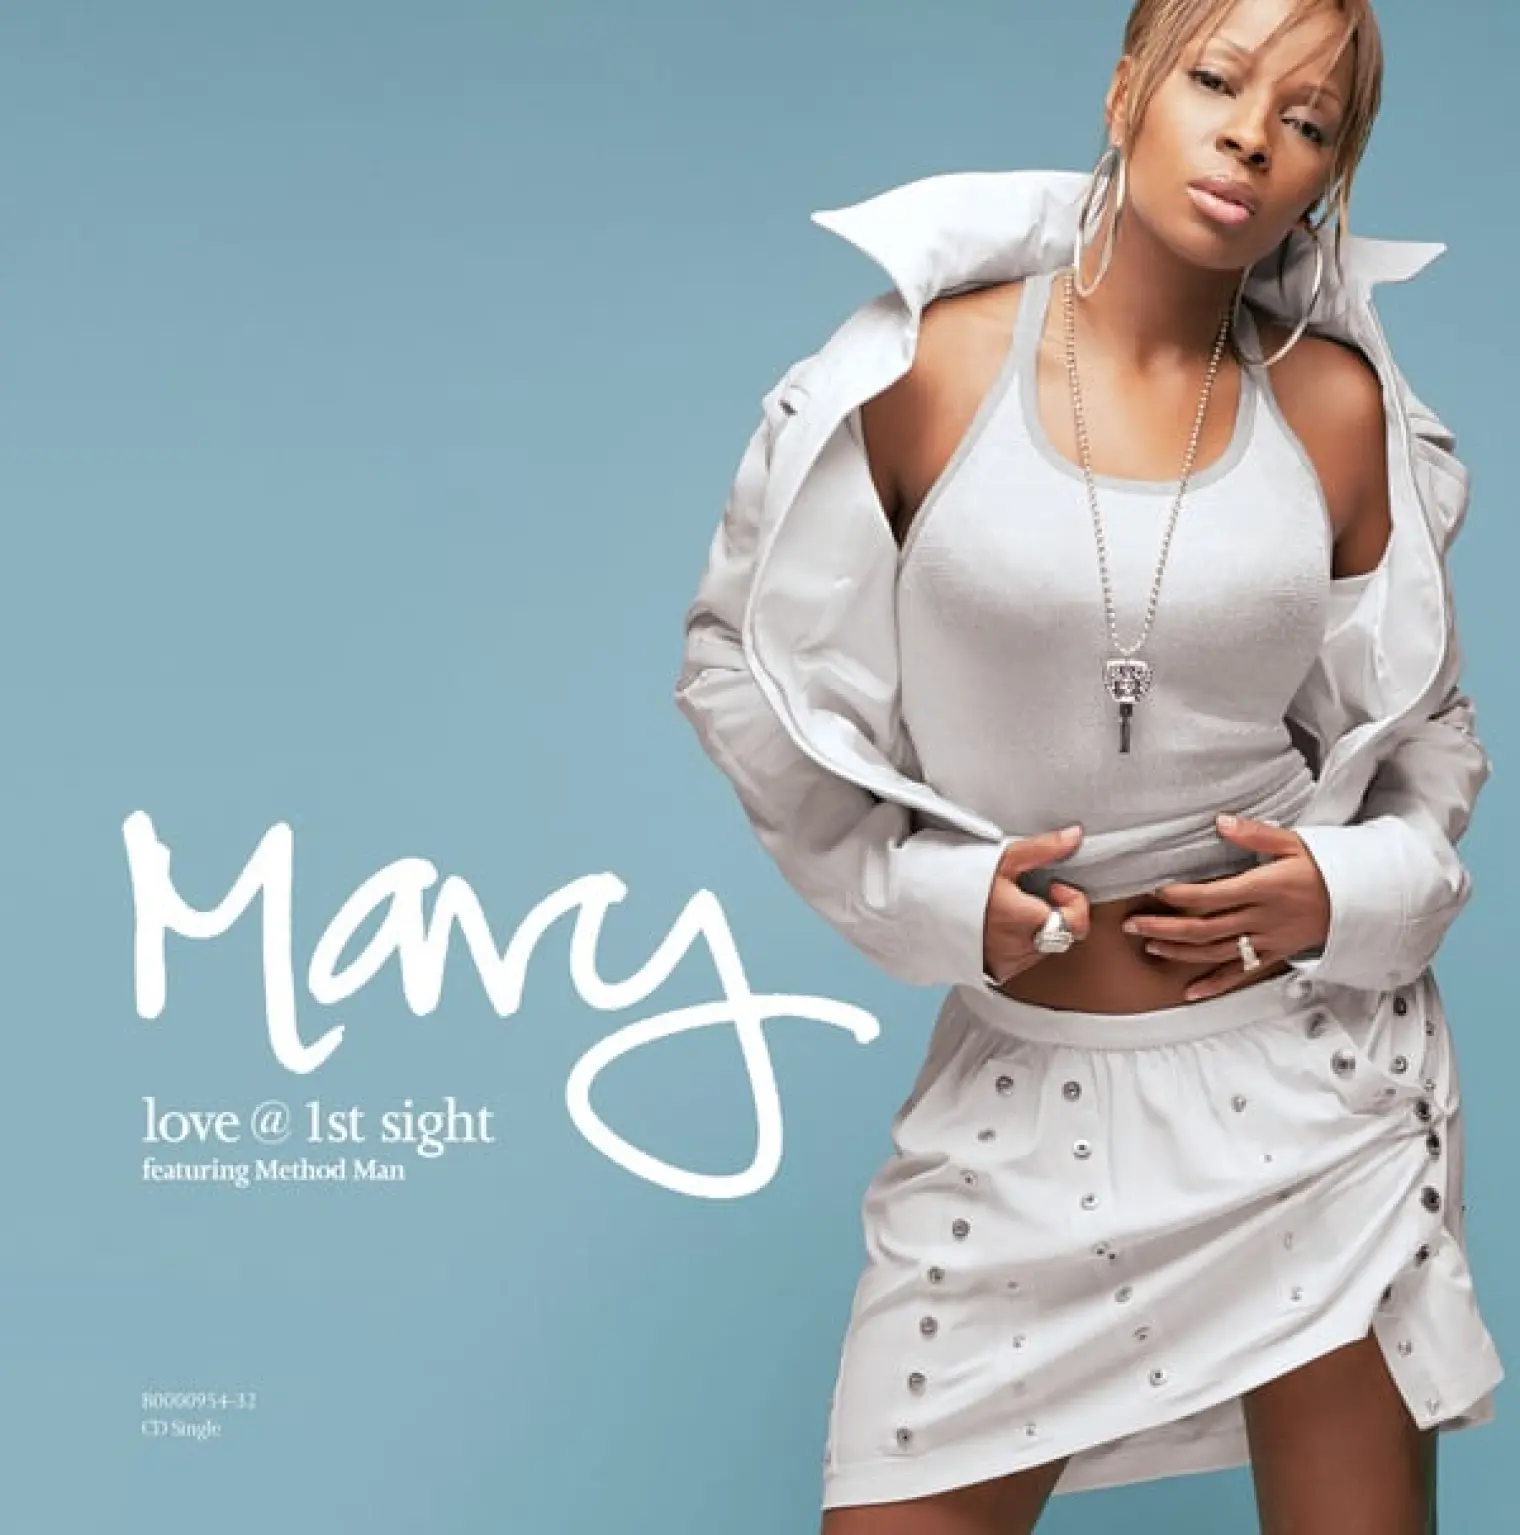 Love @ 1st Sight -  Mary J. Blige 